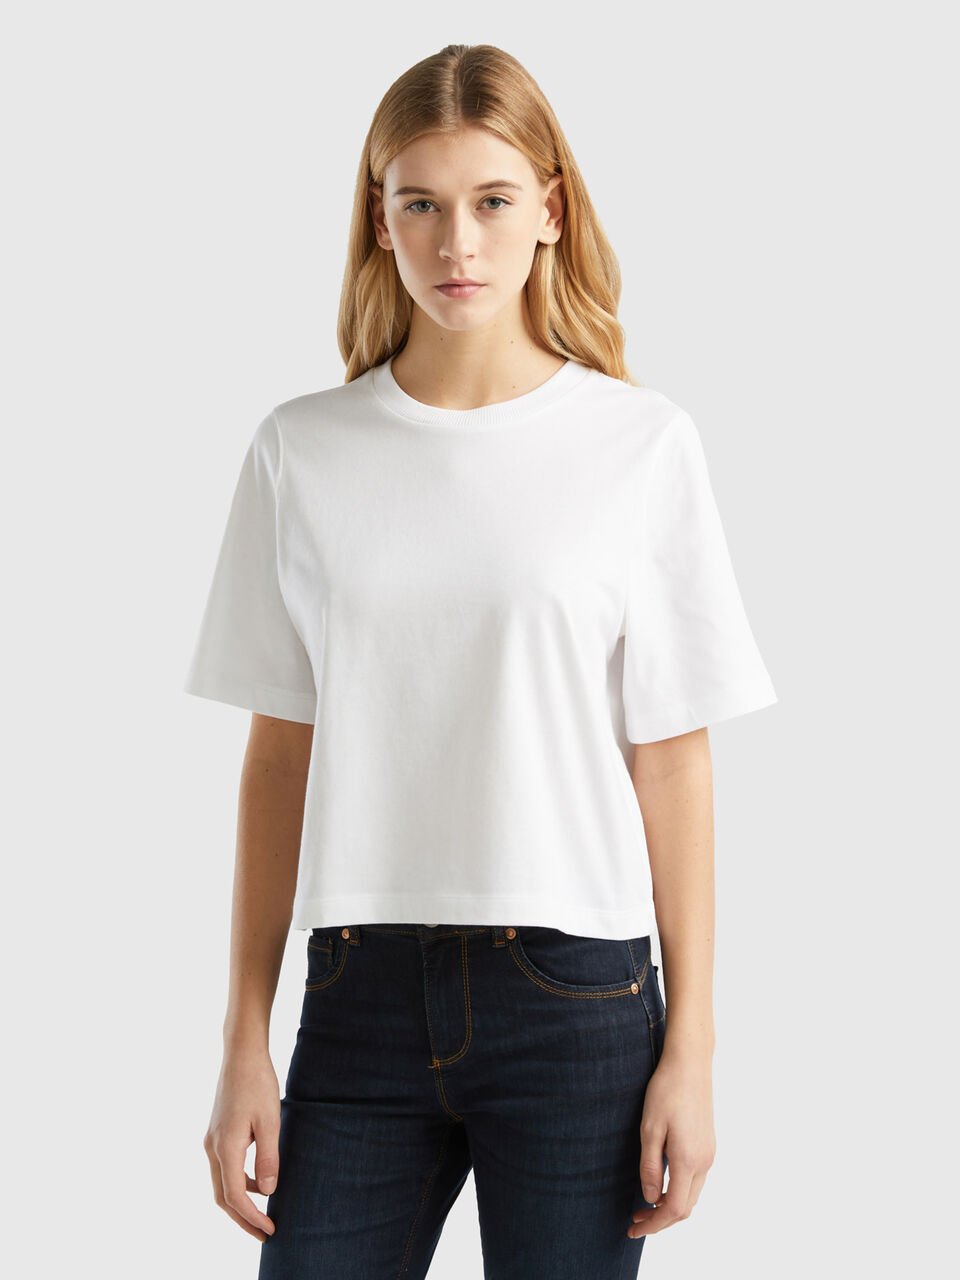 - Benetton White 100% boxy fit t-shirt cotton |